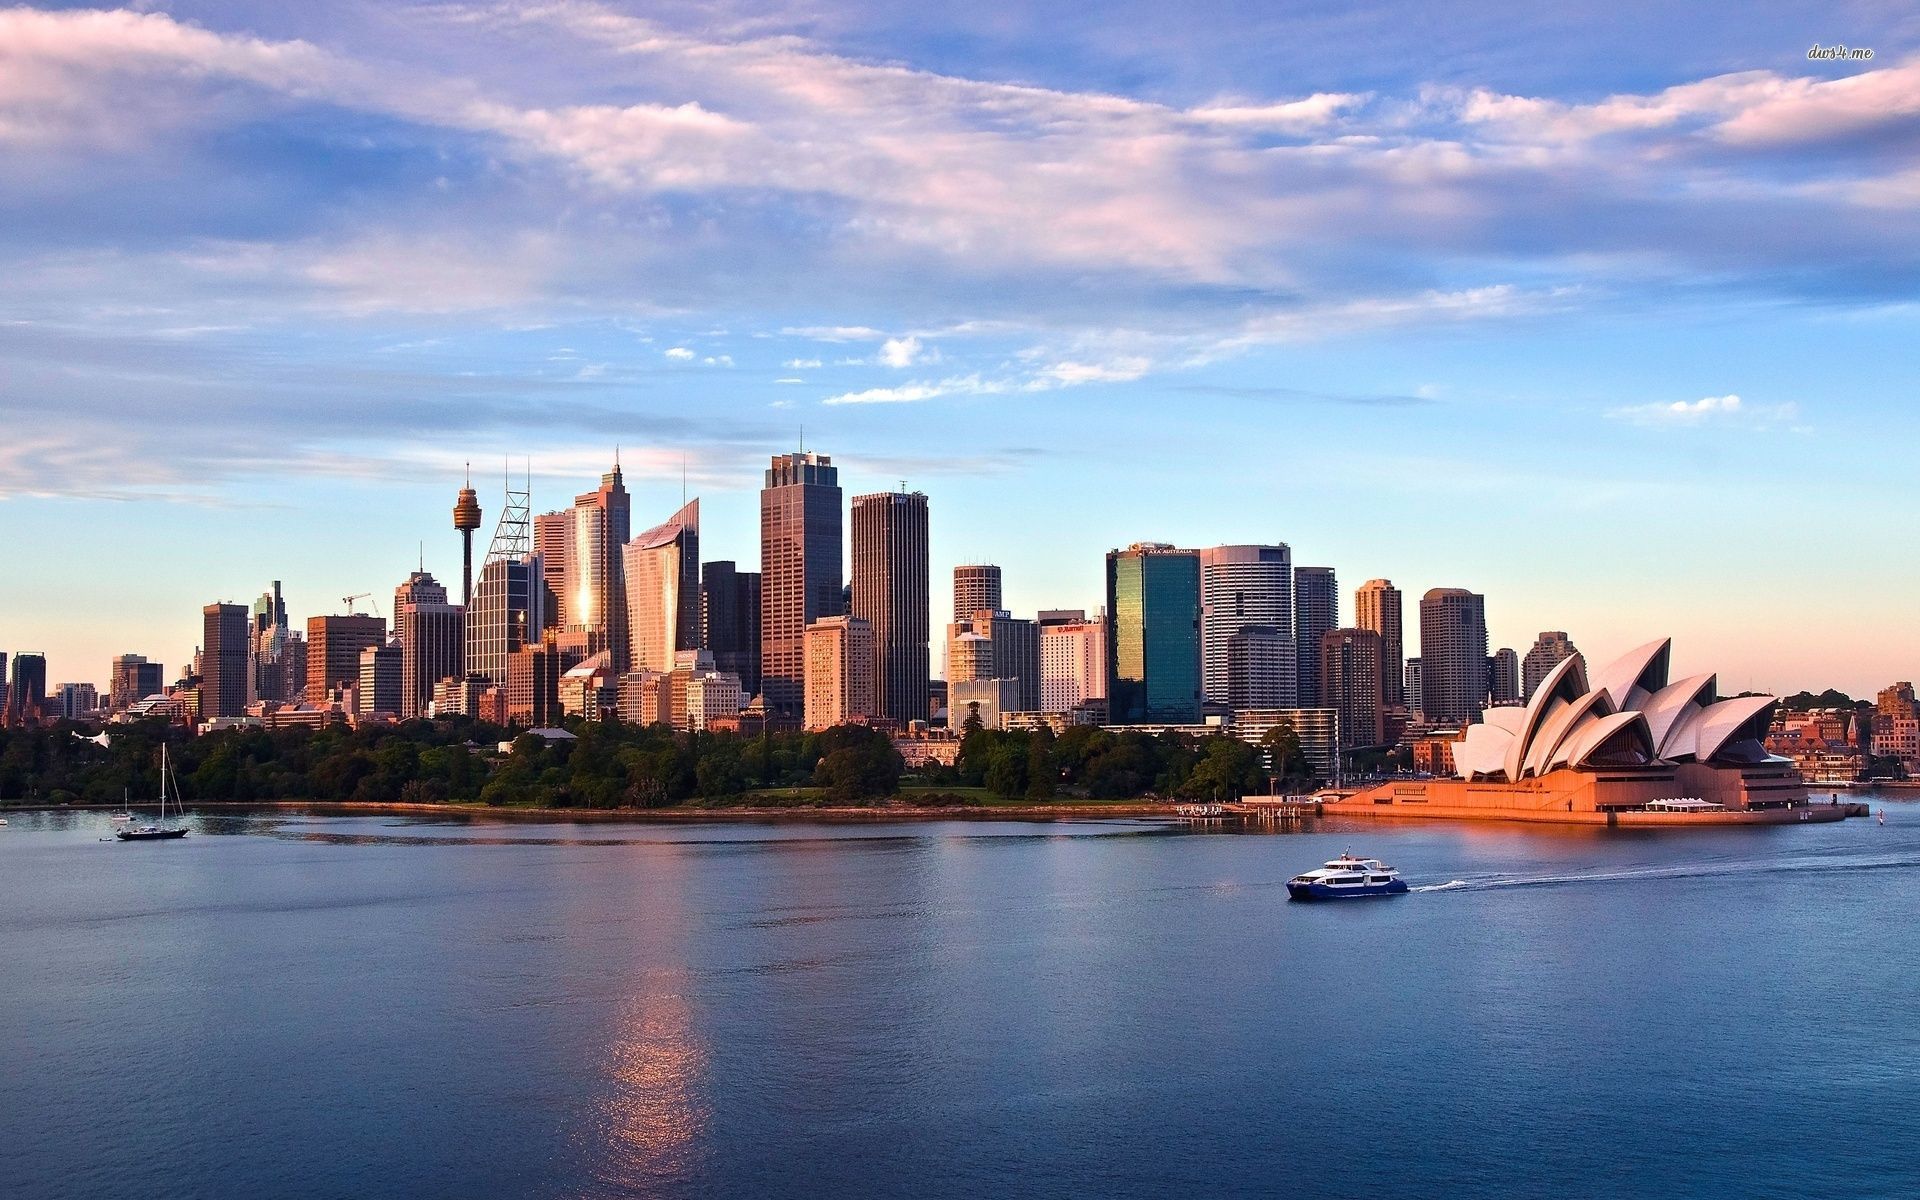 Sydney wallpaper - World wallpapers -